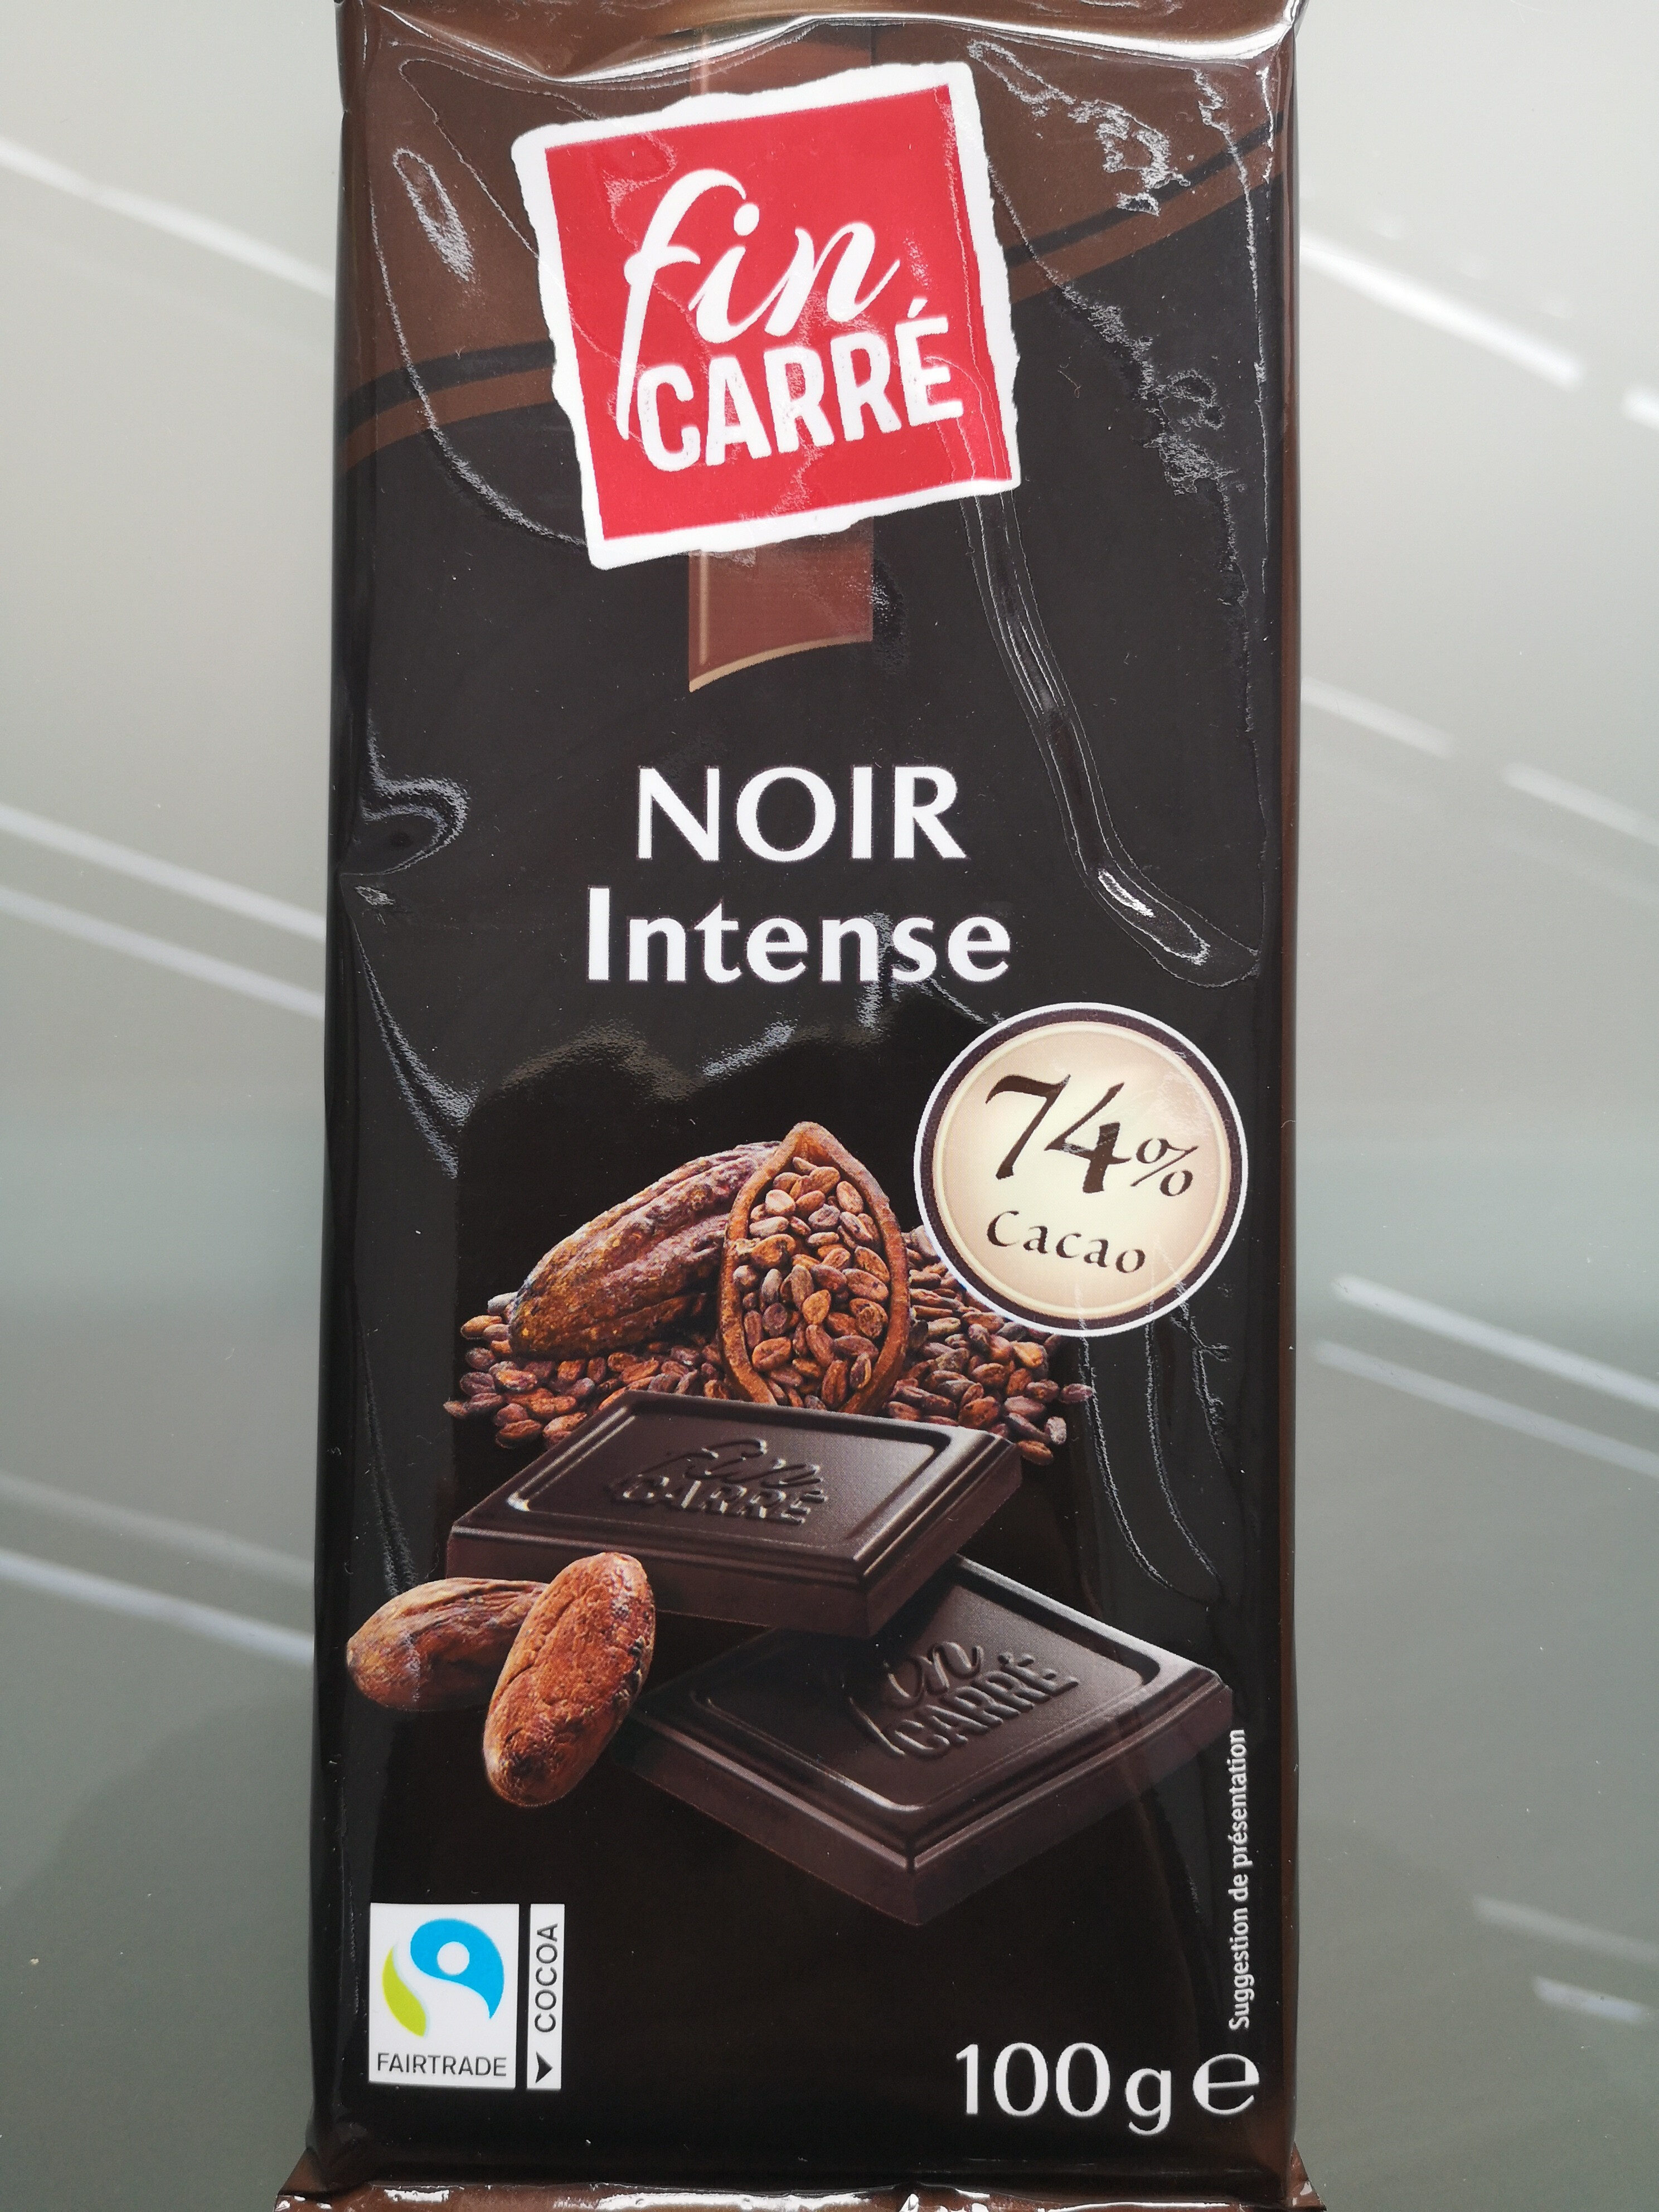 Chocolat noir Intense 74% cacao - Product - fr